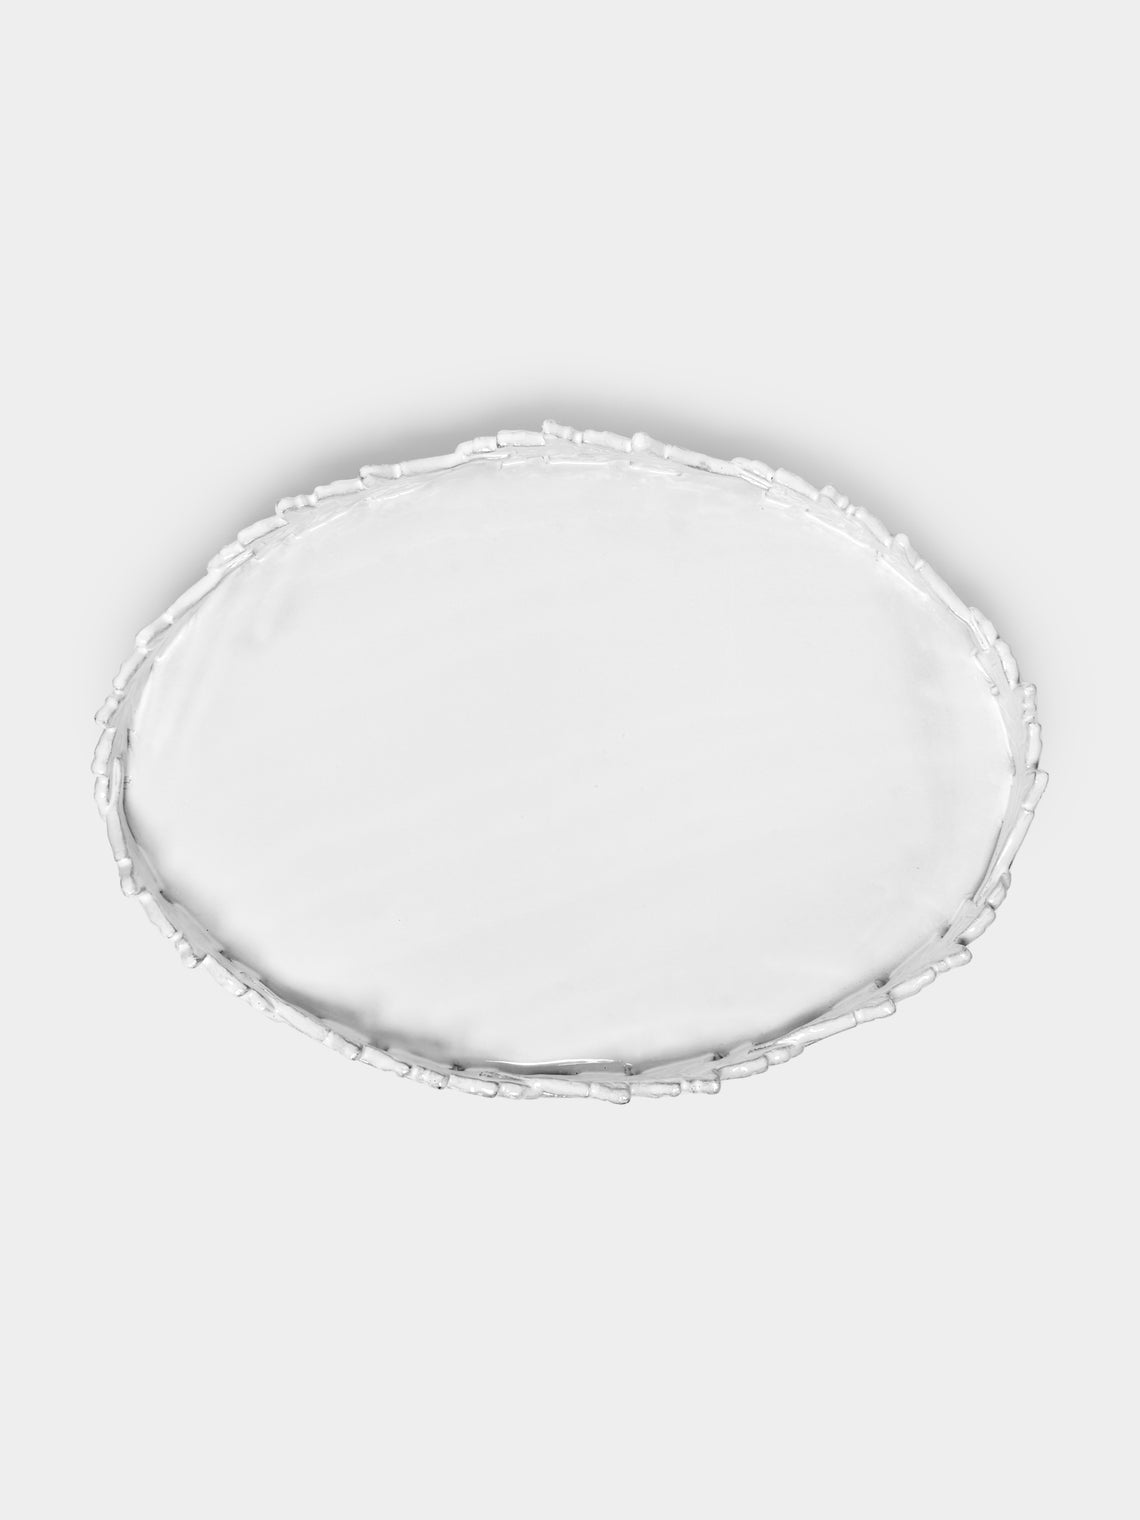 Astier de Villatte - Large Oval Footed Platter with Leaves -  - ABASK